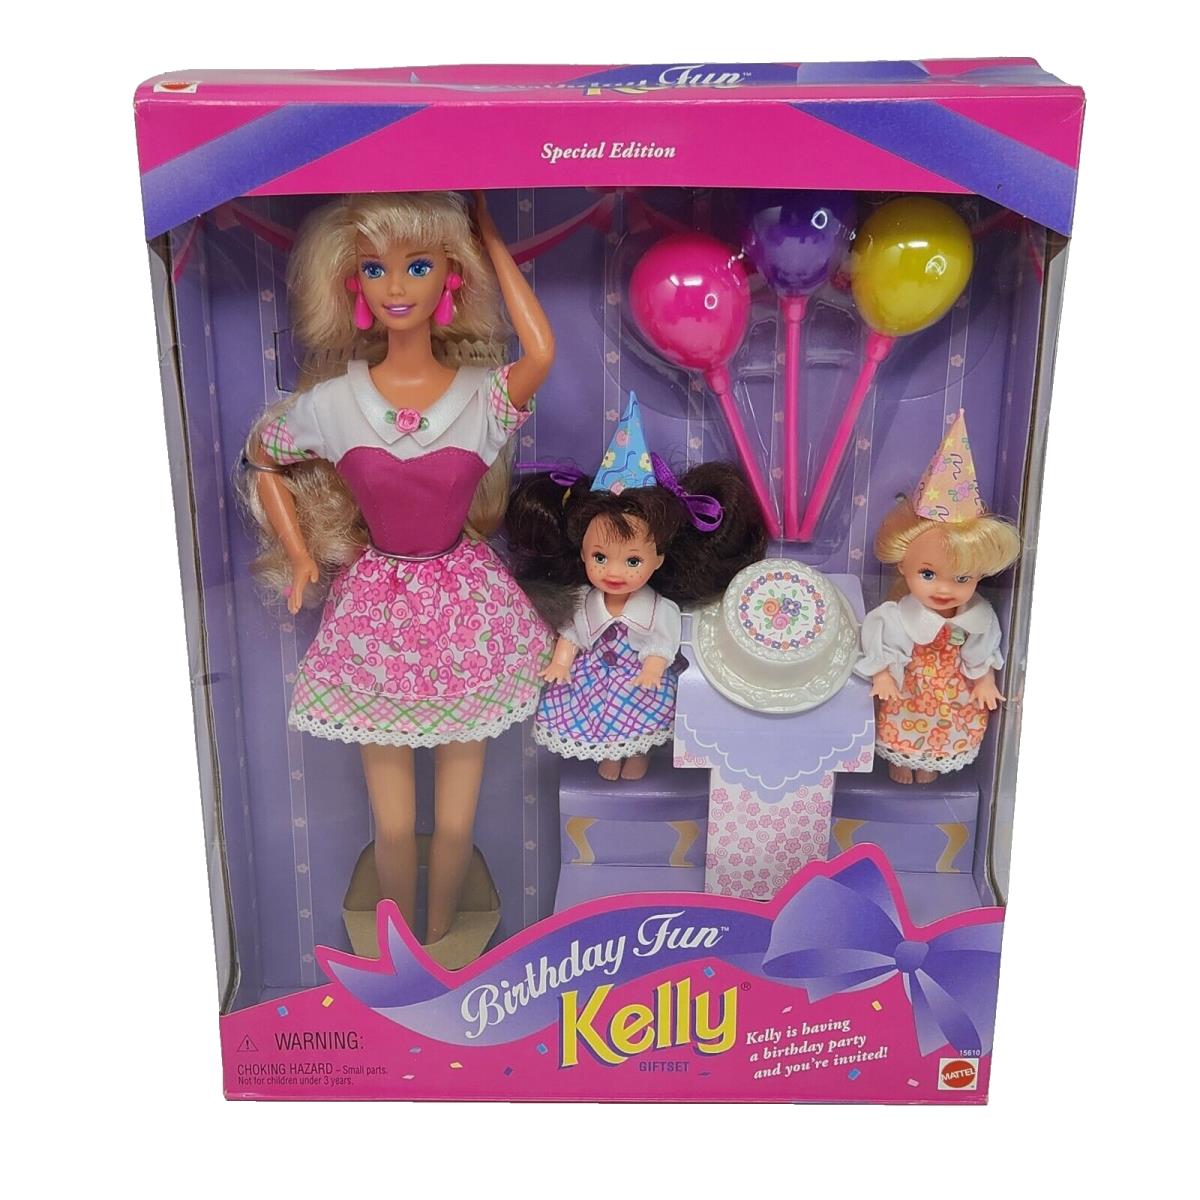 Vintage 1995 Birthday Fun Barbie Kelly + Friend Doll Mattel Box 13555